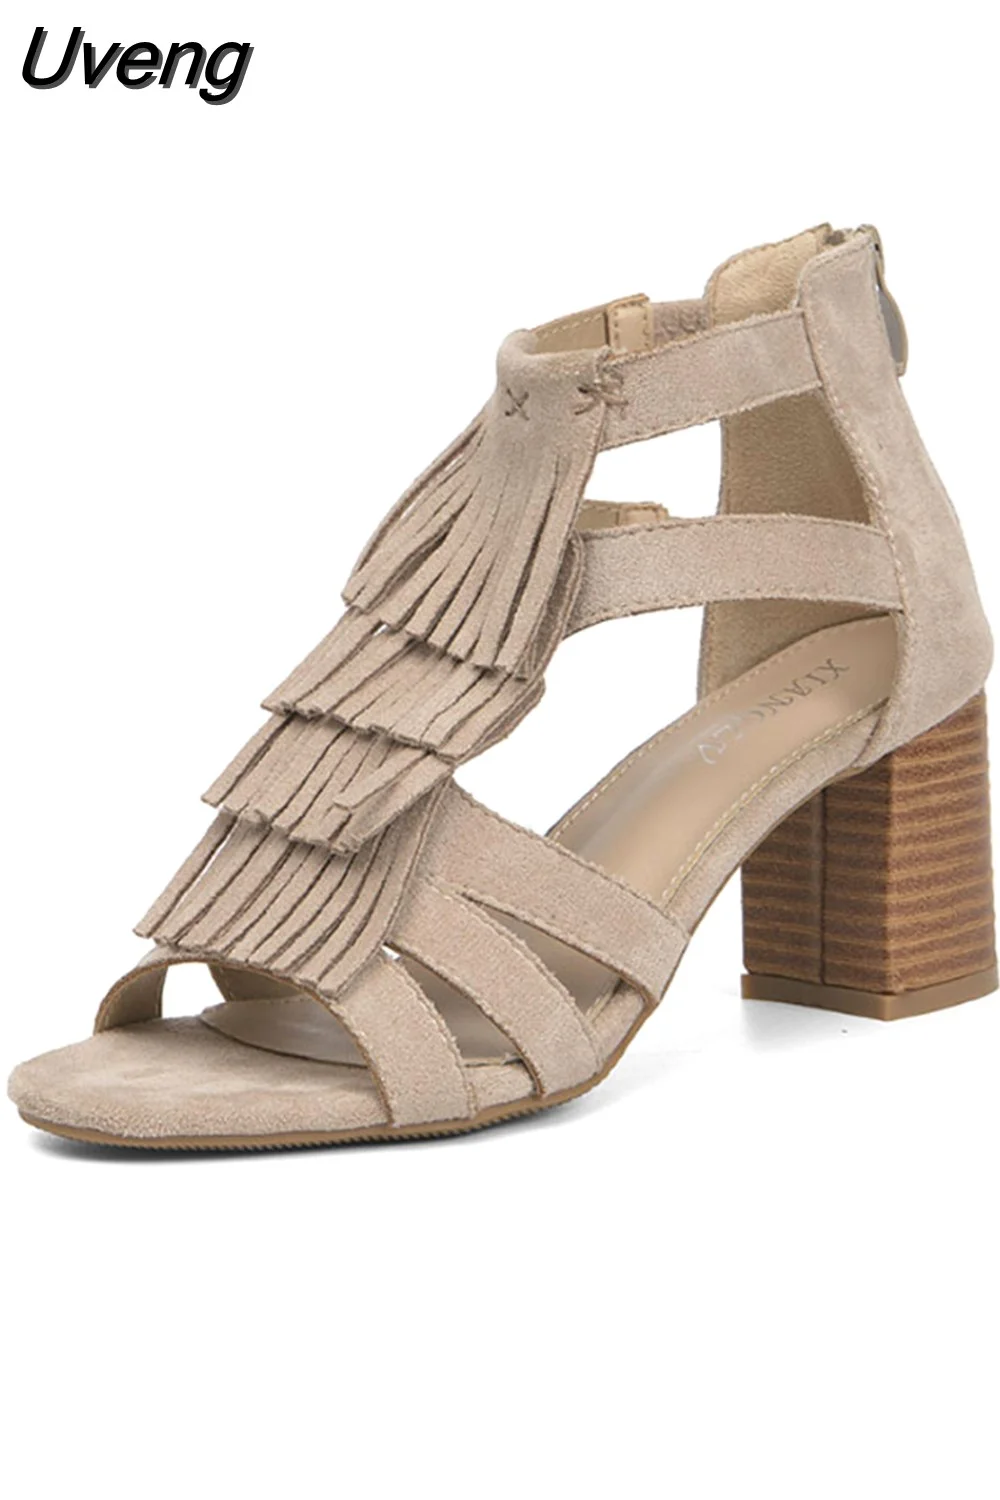 Uveng After The Zipper High With Roman Women's Shoes 2023 Summer Tassel Beach Sandals Boots Solid High Heeled Sandals Female